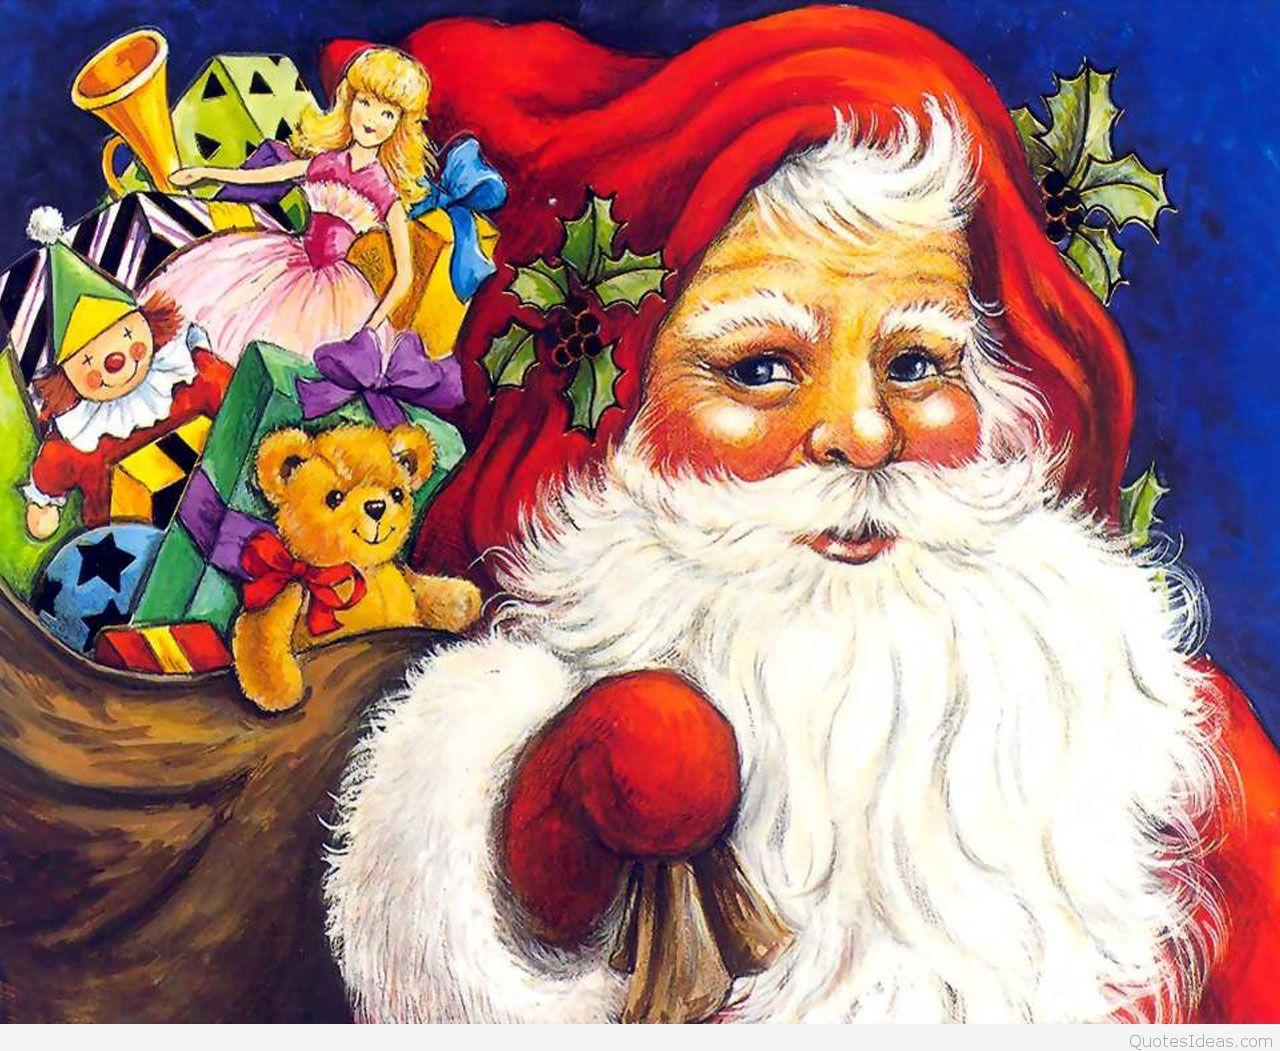 Humorous Funny Santa Claus Christmas pics and comics